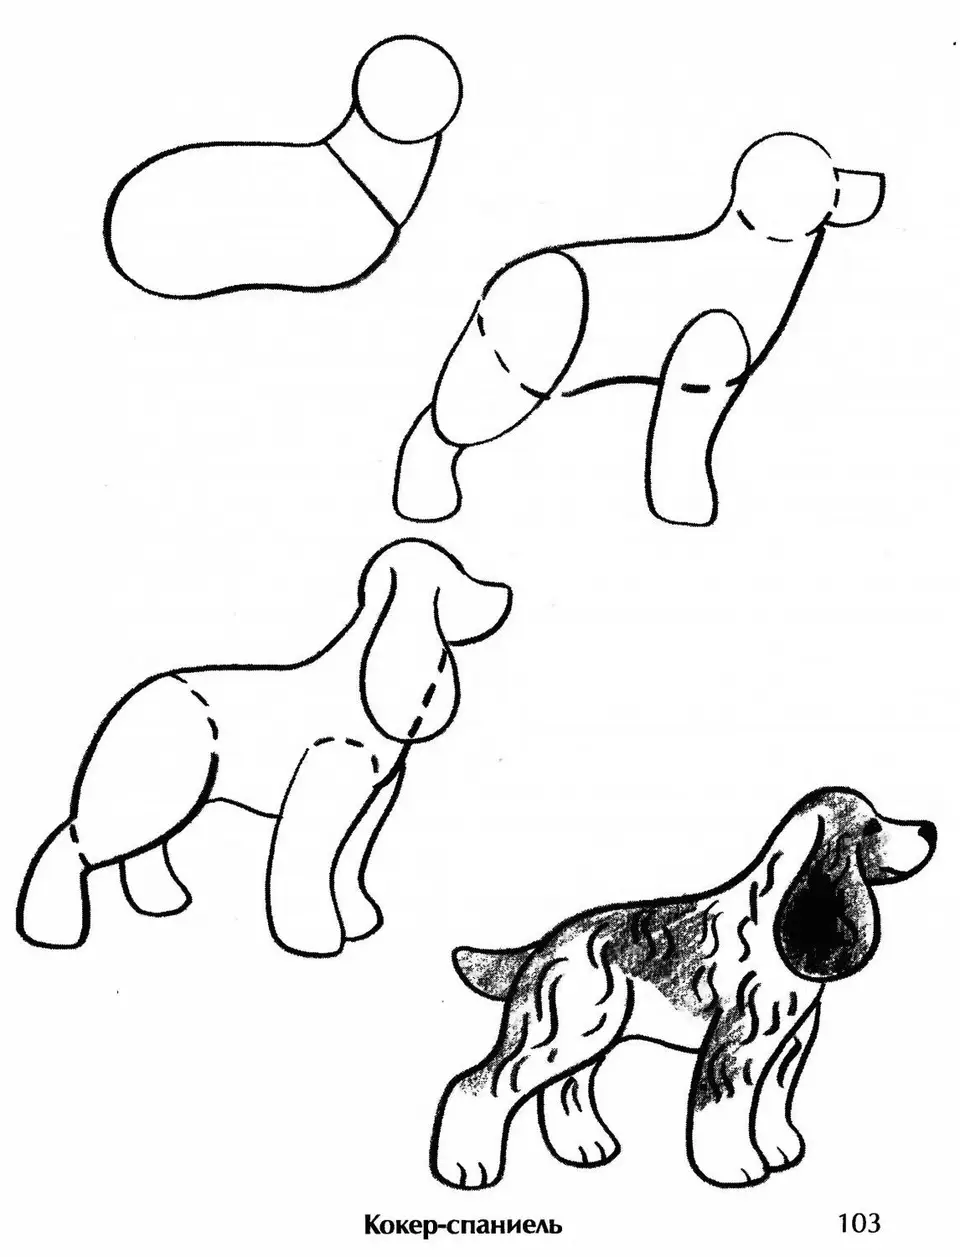 Рисование собаки поэтапно